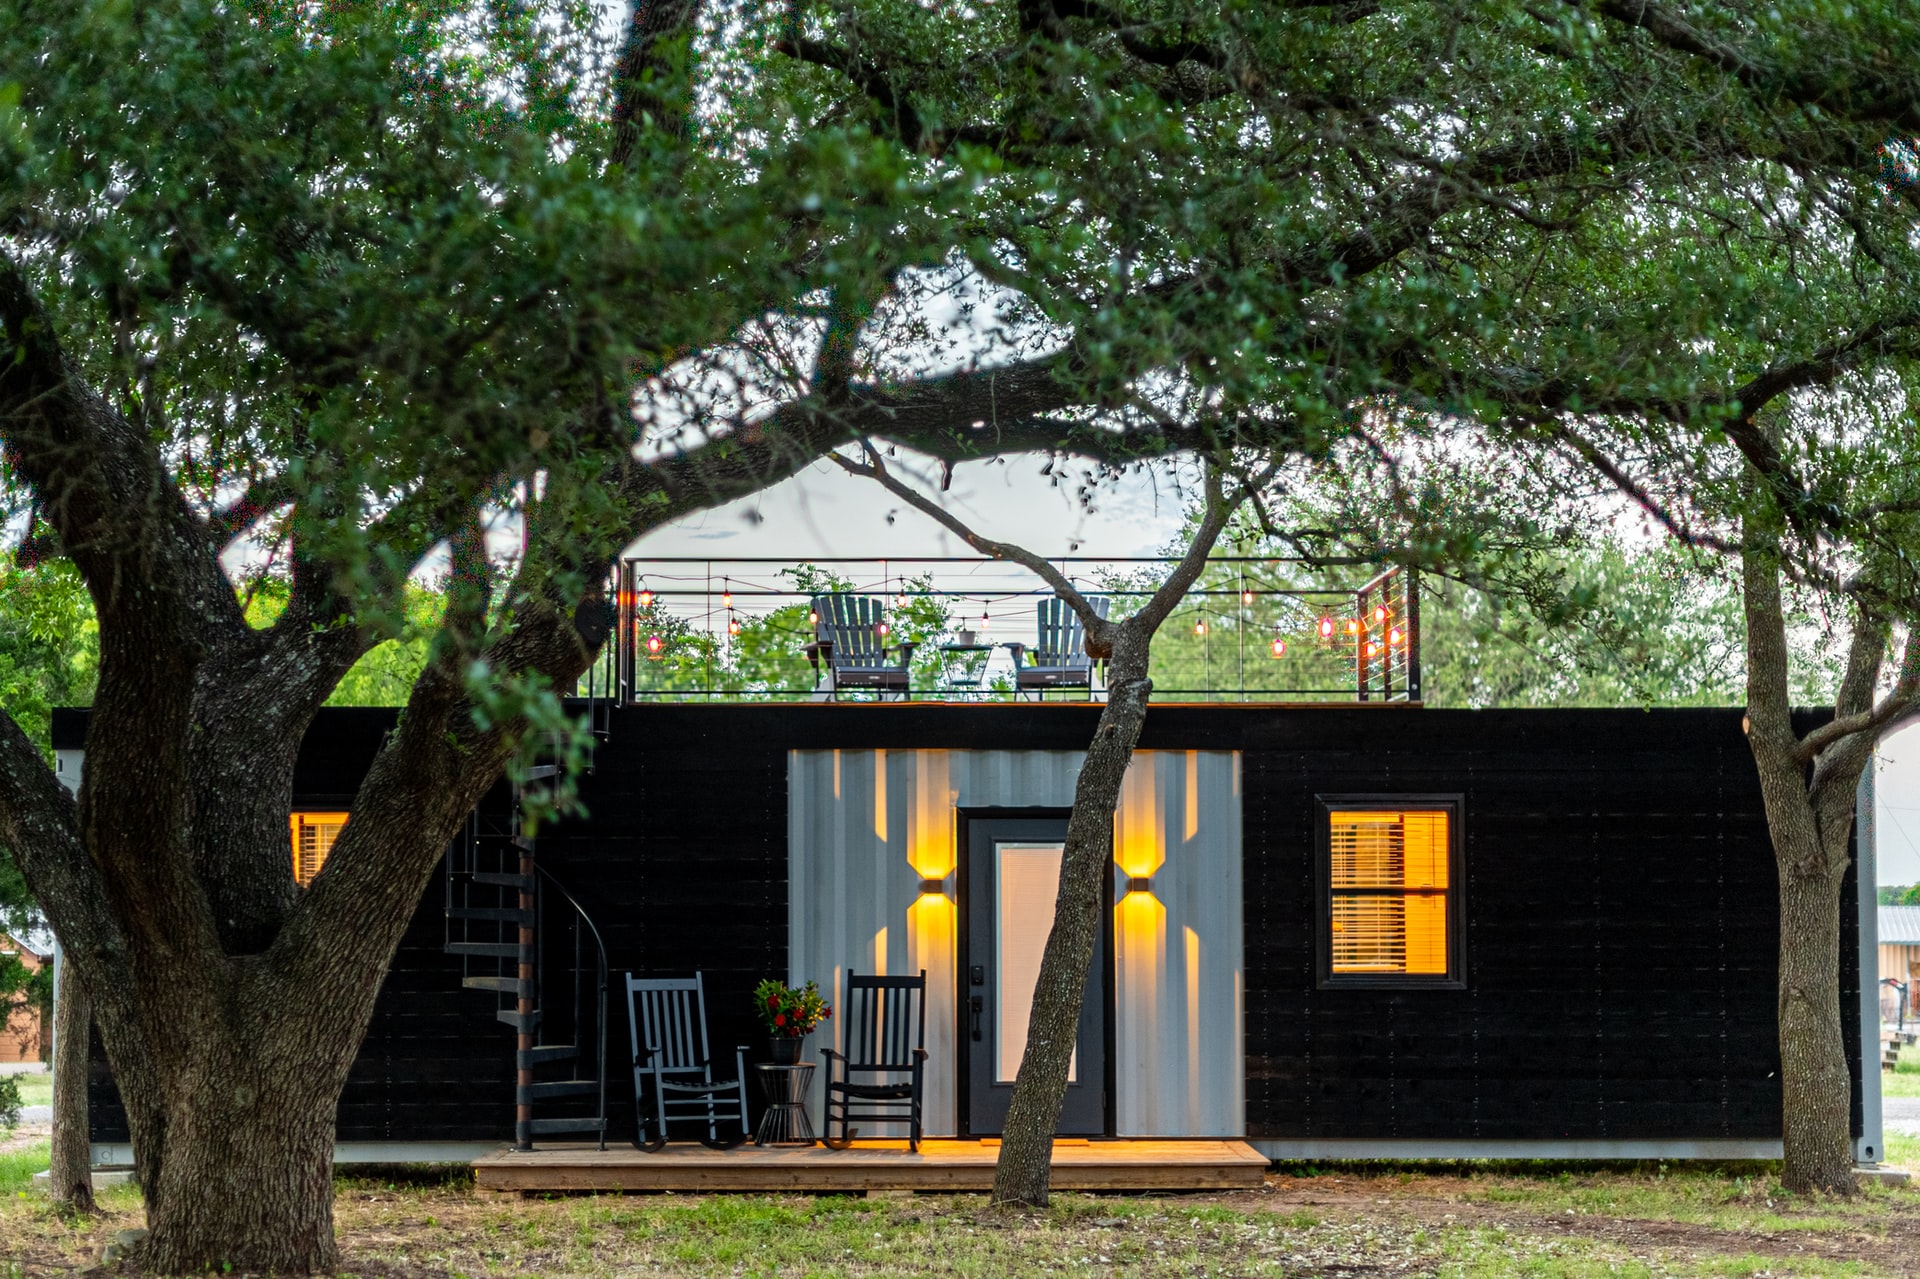 Tiny home in Waco Texas by Jed Owen on Unsplash